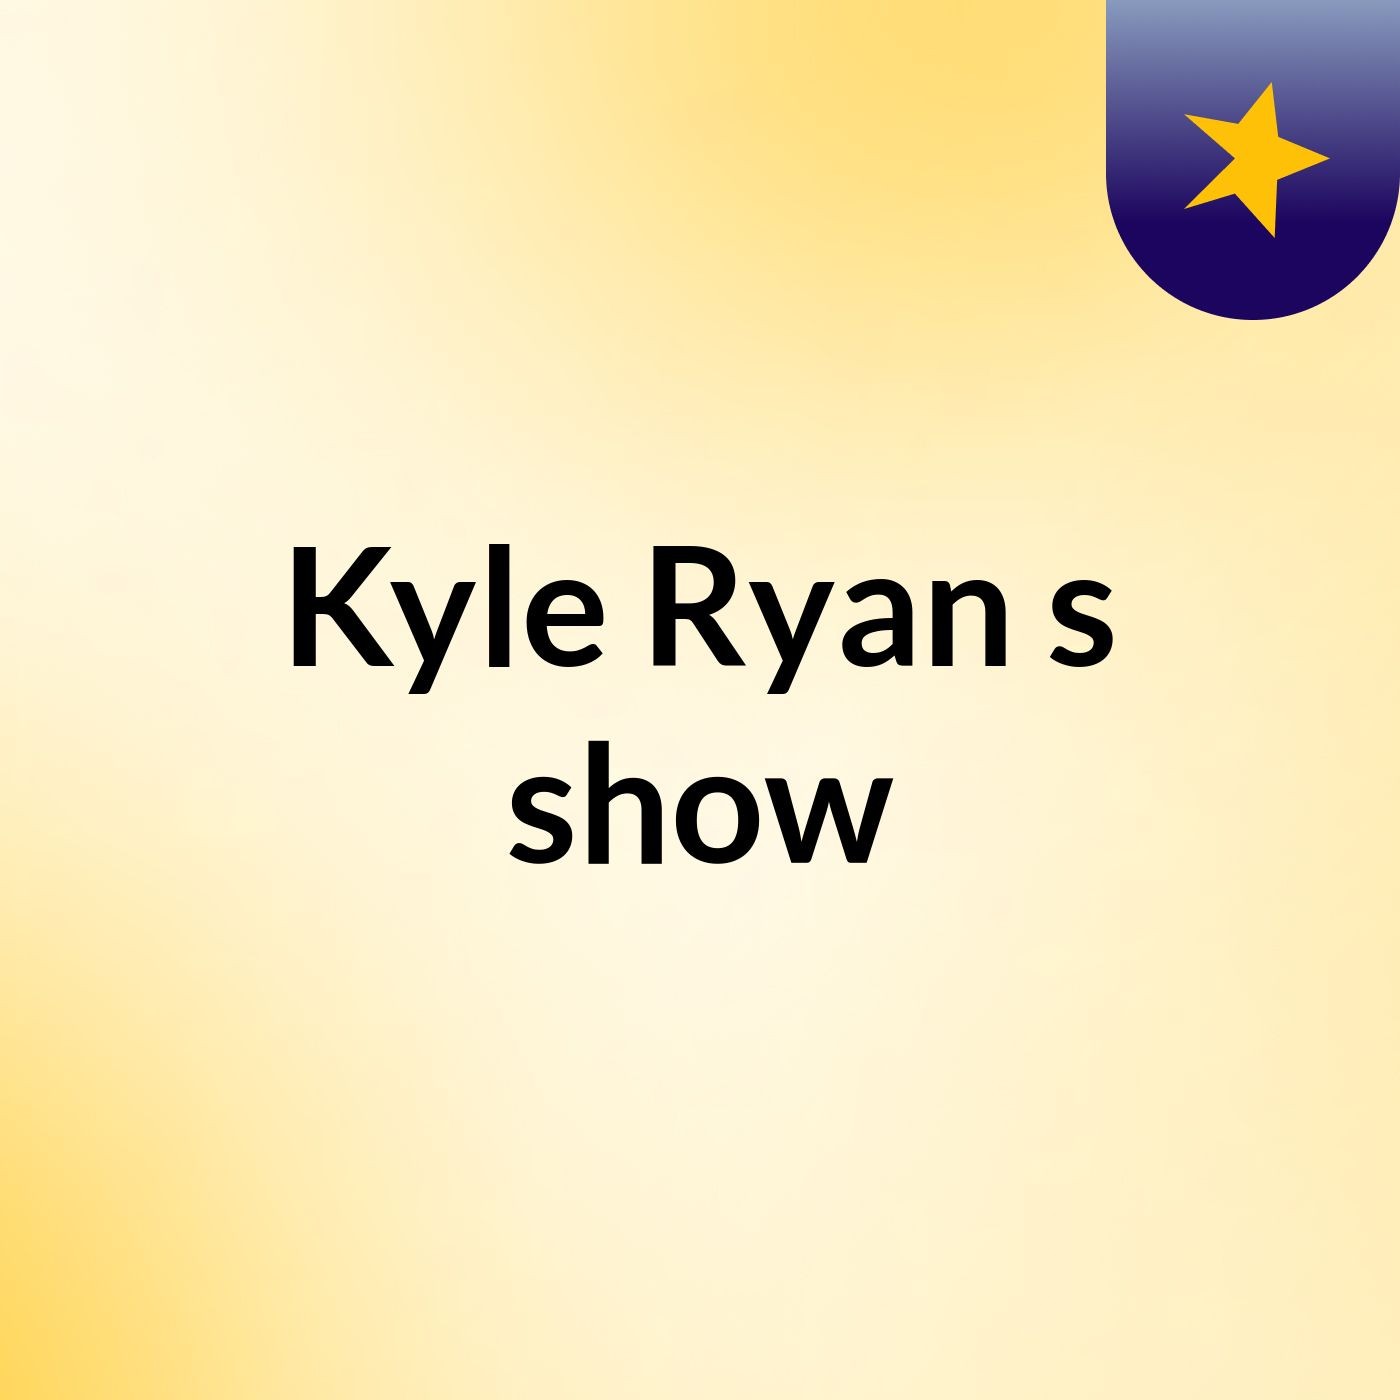 Kyle Ryan's show